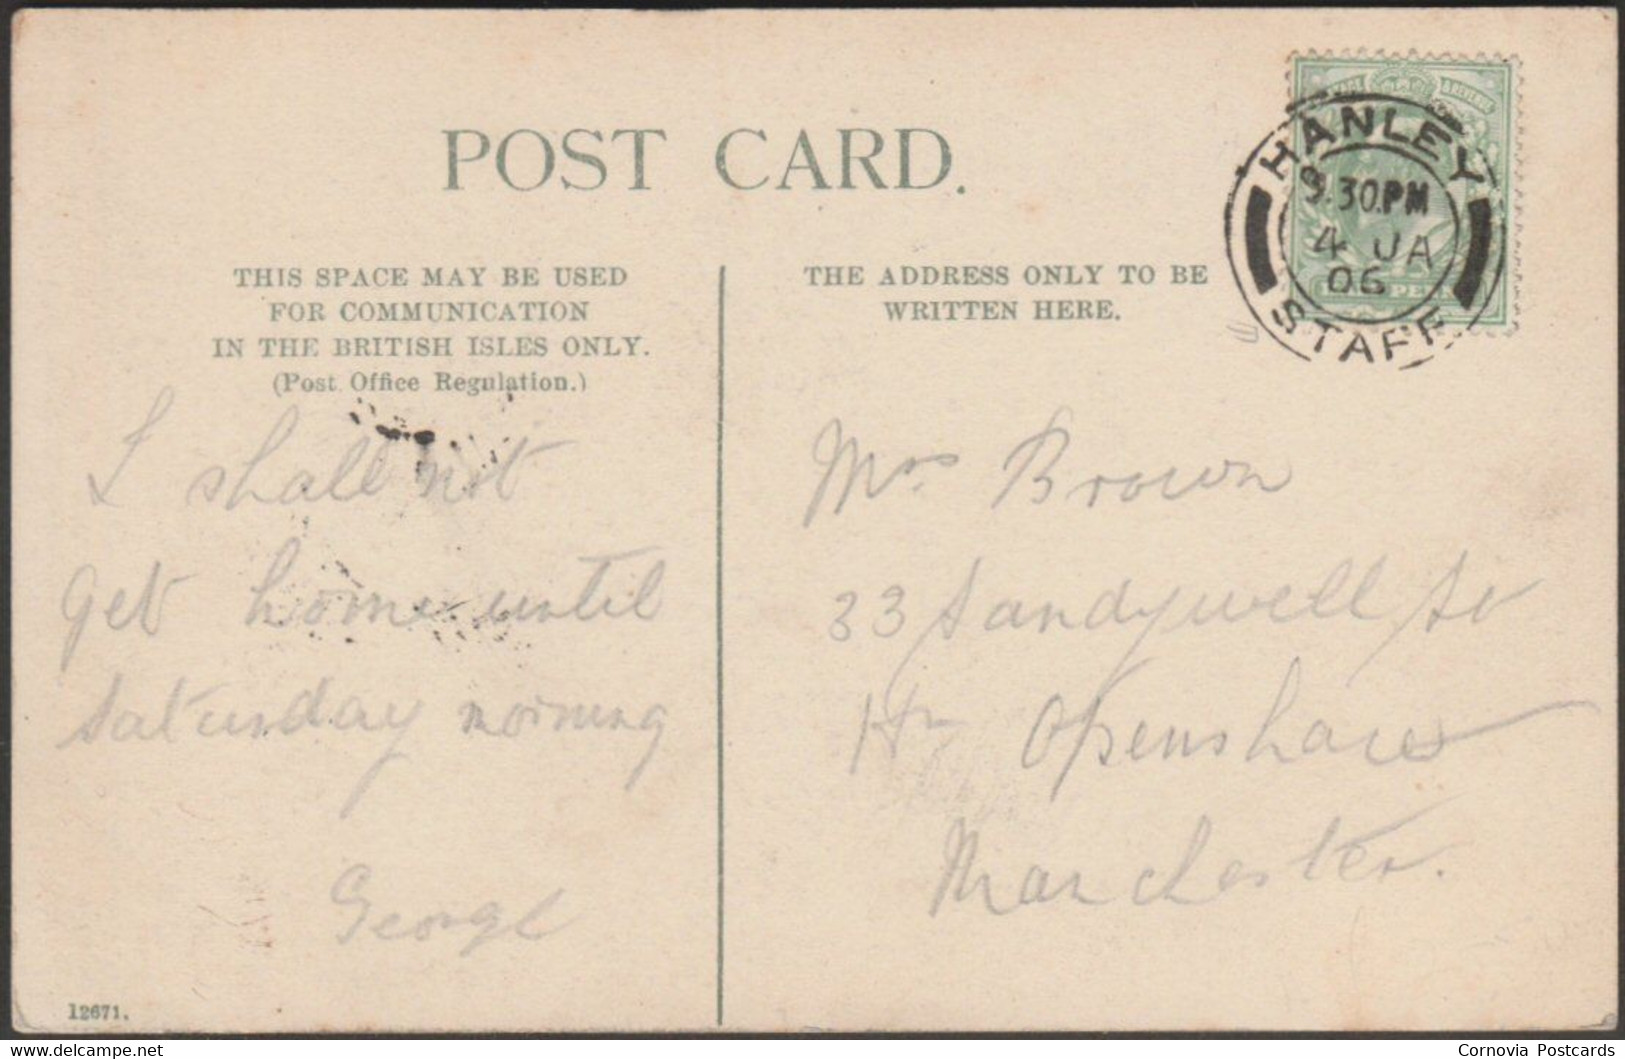 Town Hall, Hanley, Staffordshire, 1906 - Postcard - Stoke-on-Trent